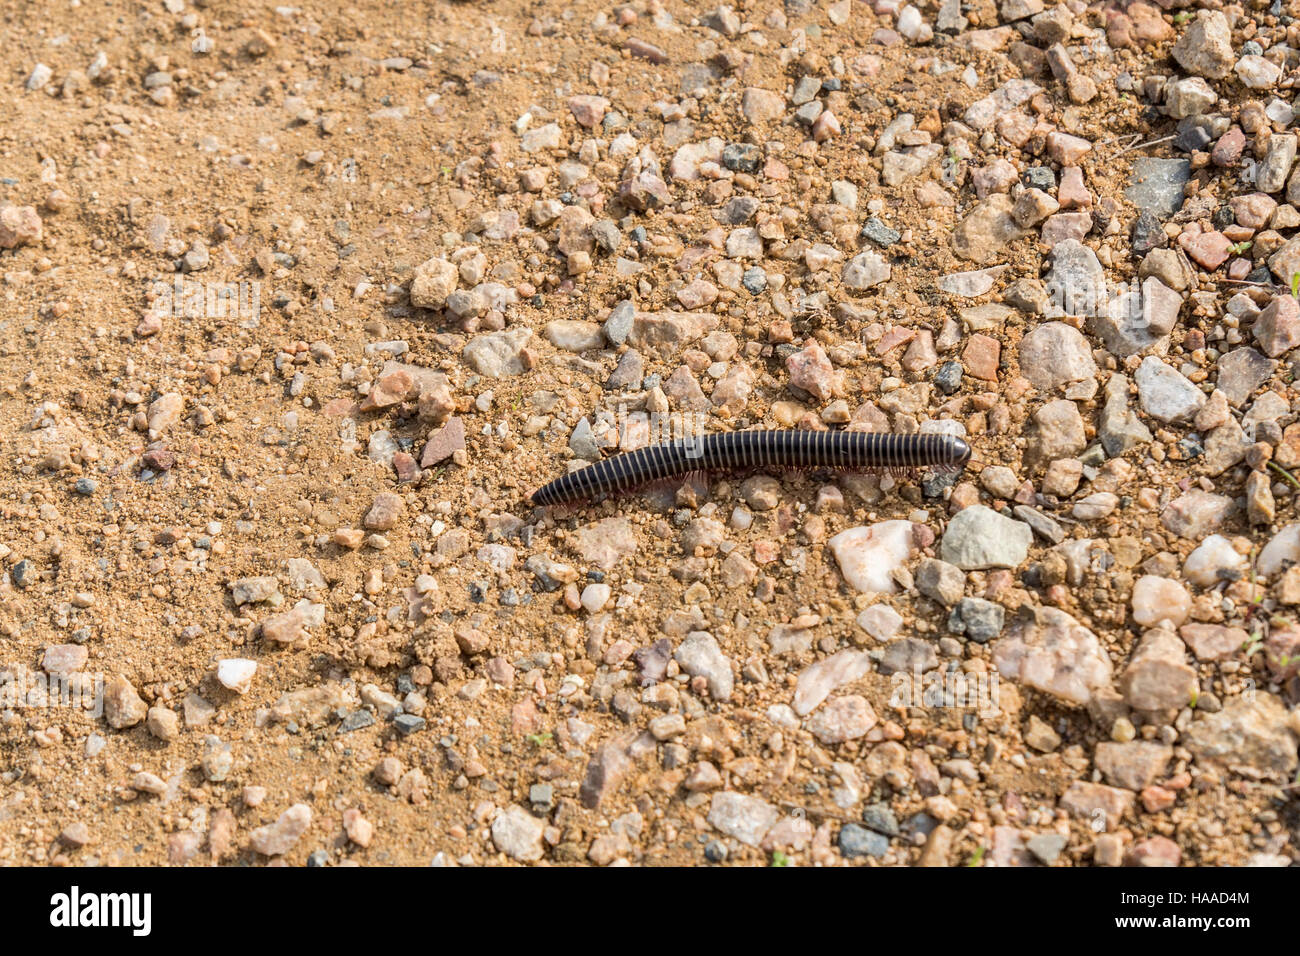 Centipede walking down the land, Chilopoda Stock Photo